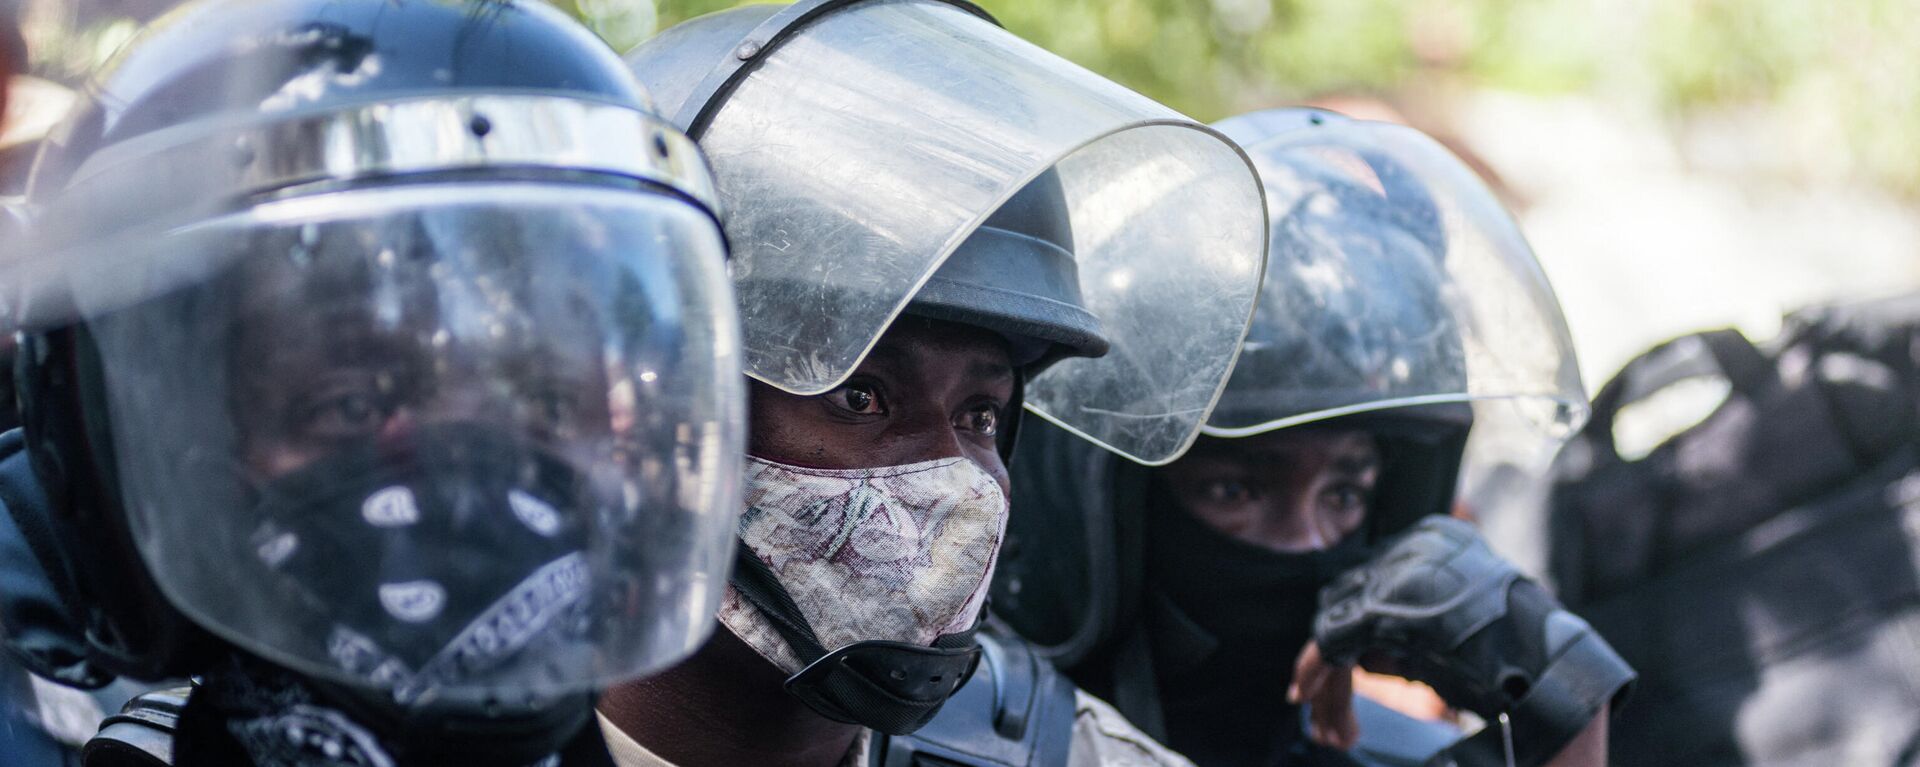 La Policía durante las protestas en Haití - Sputnik Mundo, 1920, 16.03.2021